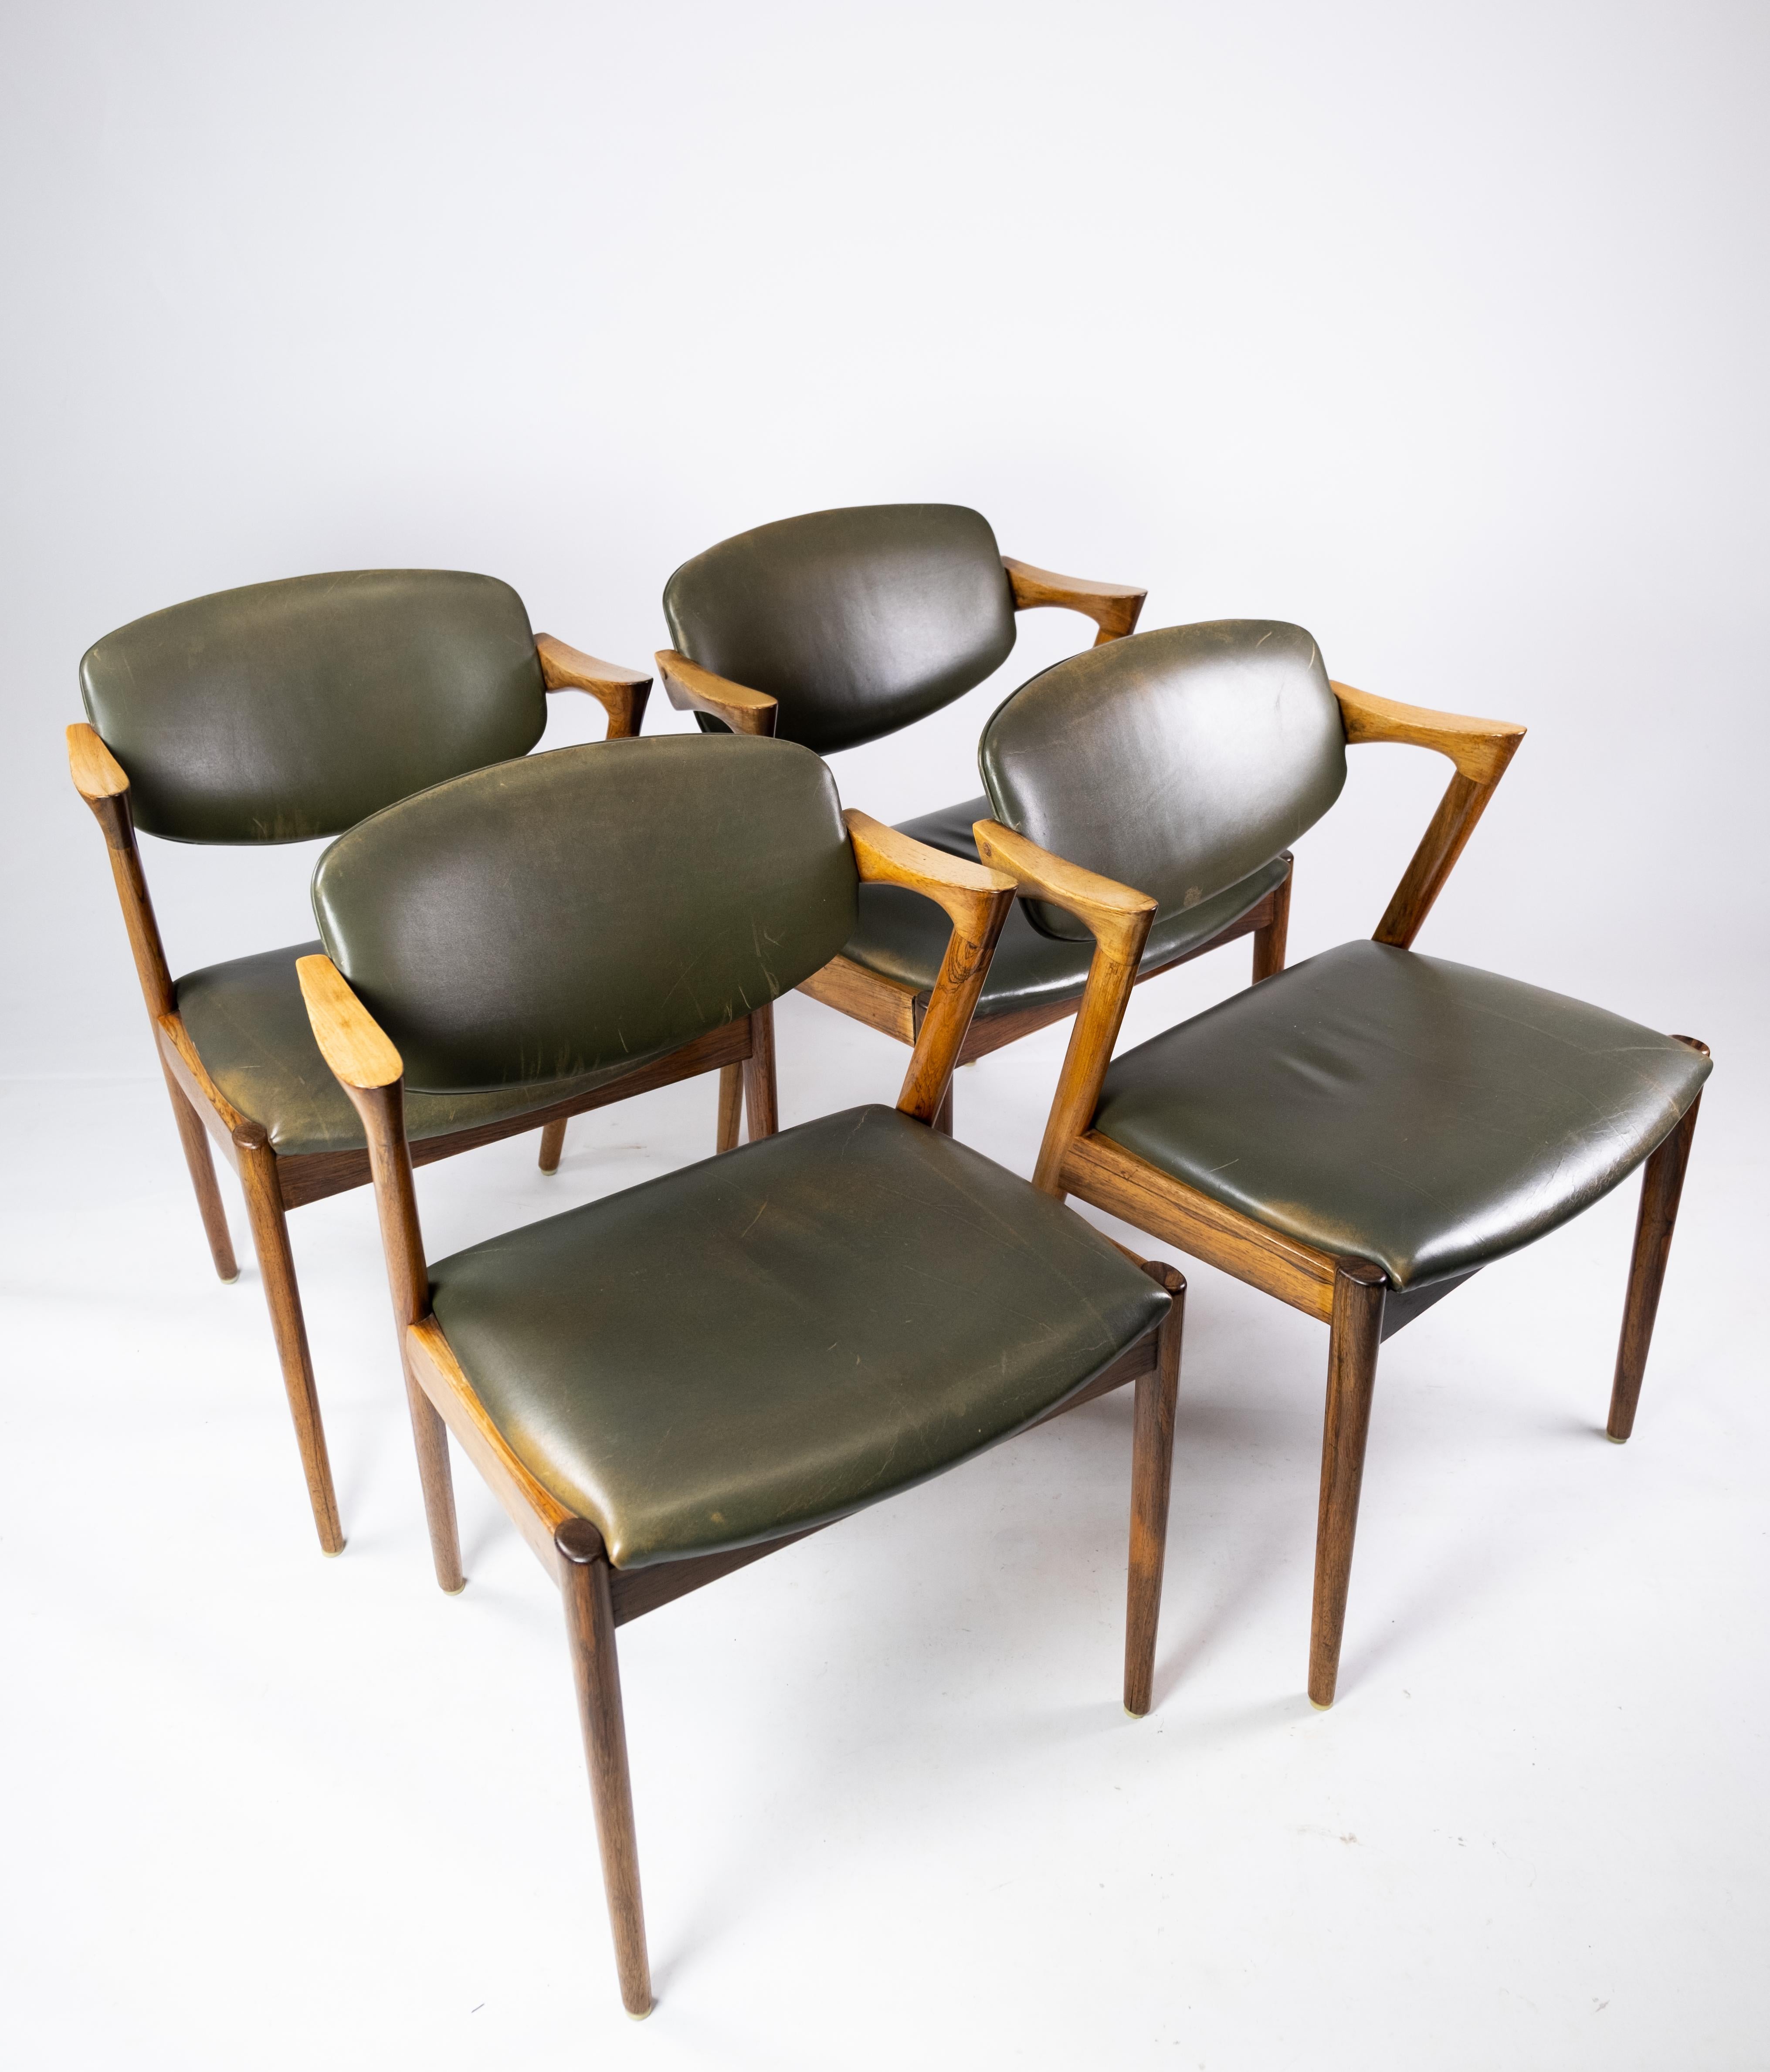 Scandinavian Modern Set of 4 Dining Chairs, Model 42, Designed by Kai Kristiansen, 1960s